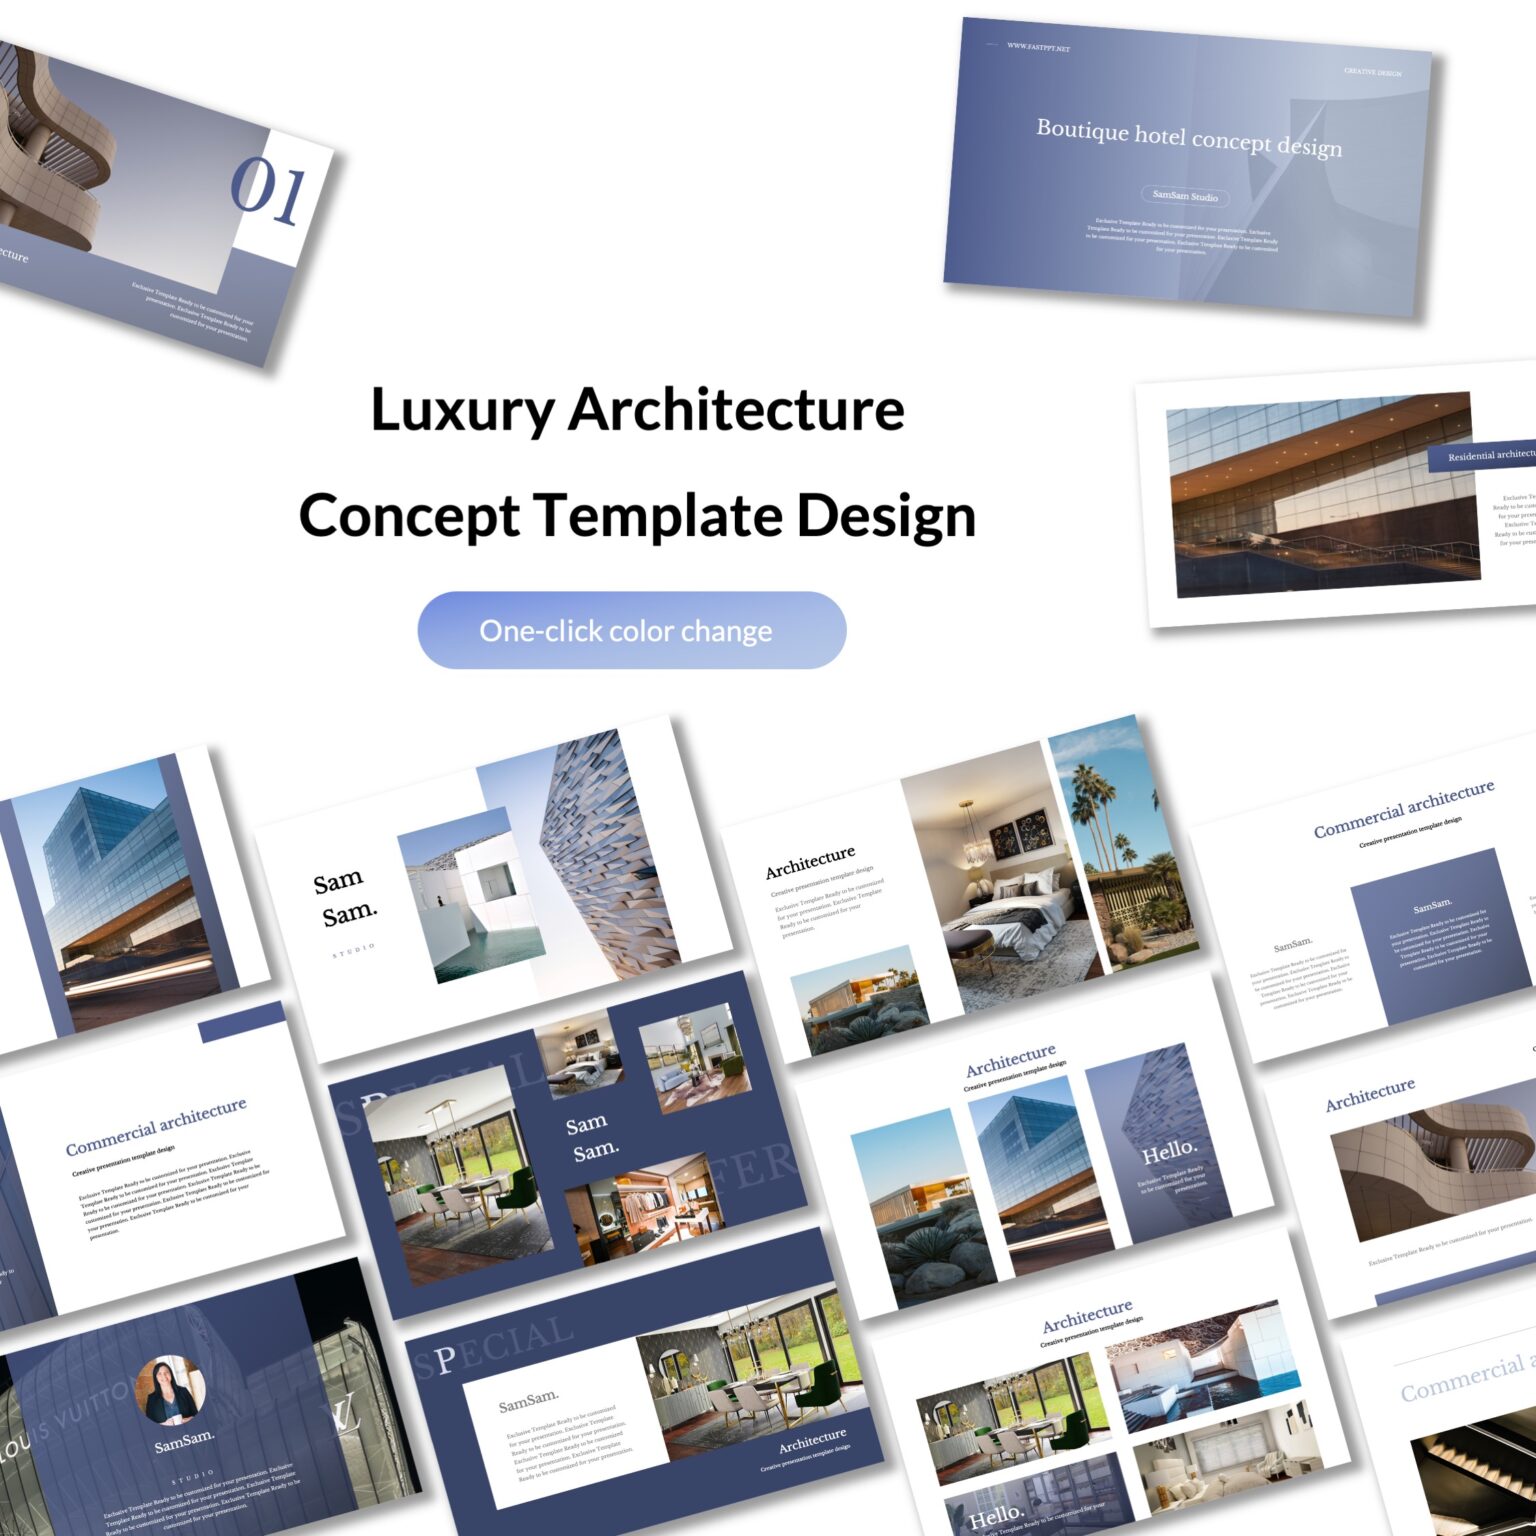 Luxury Architecture Concept Template Design